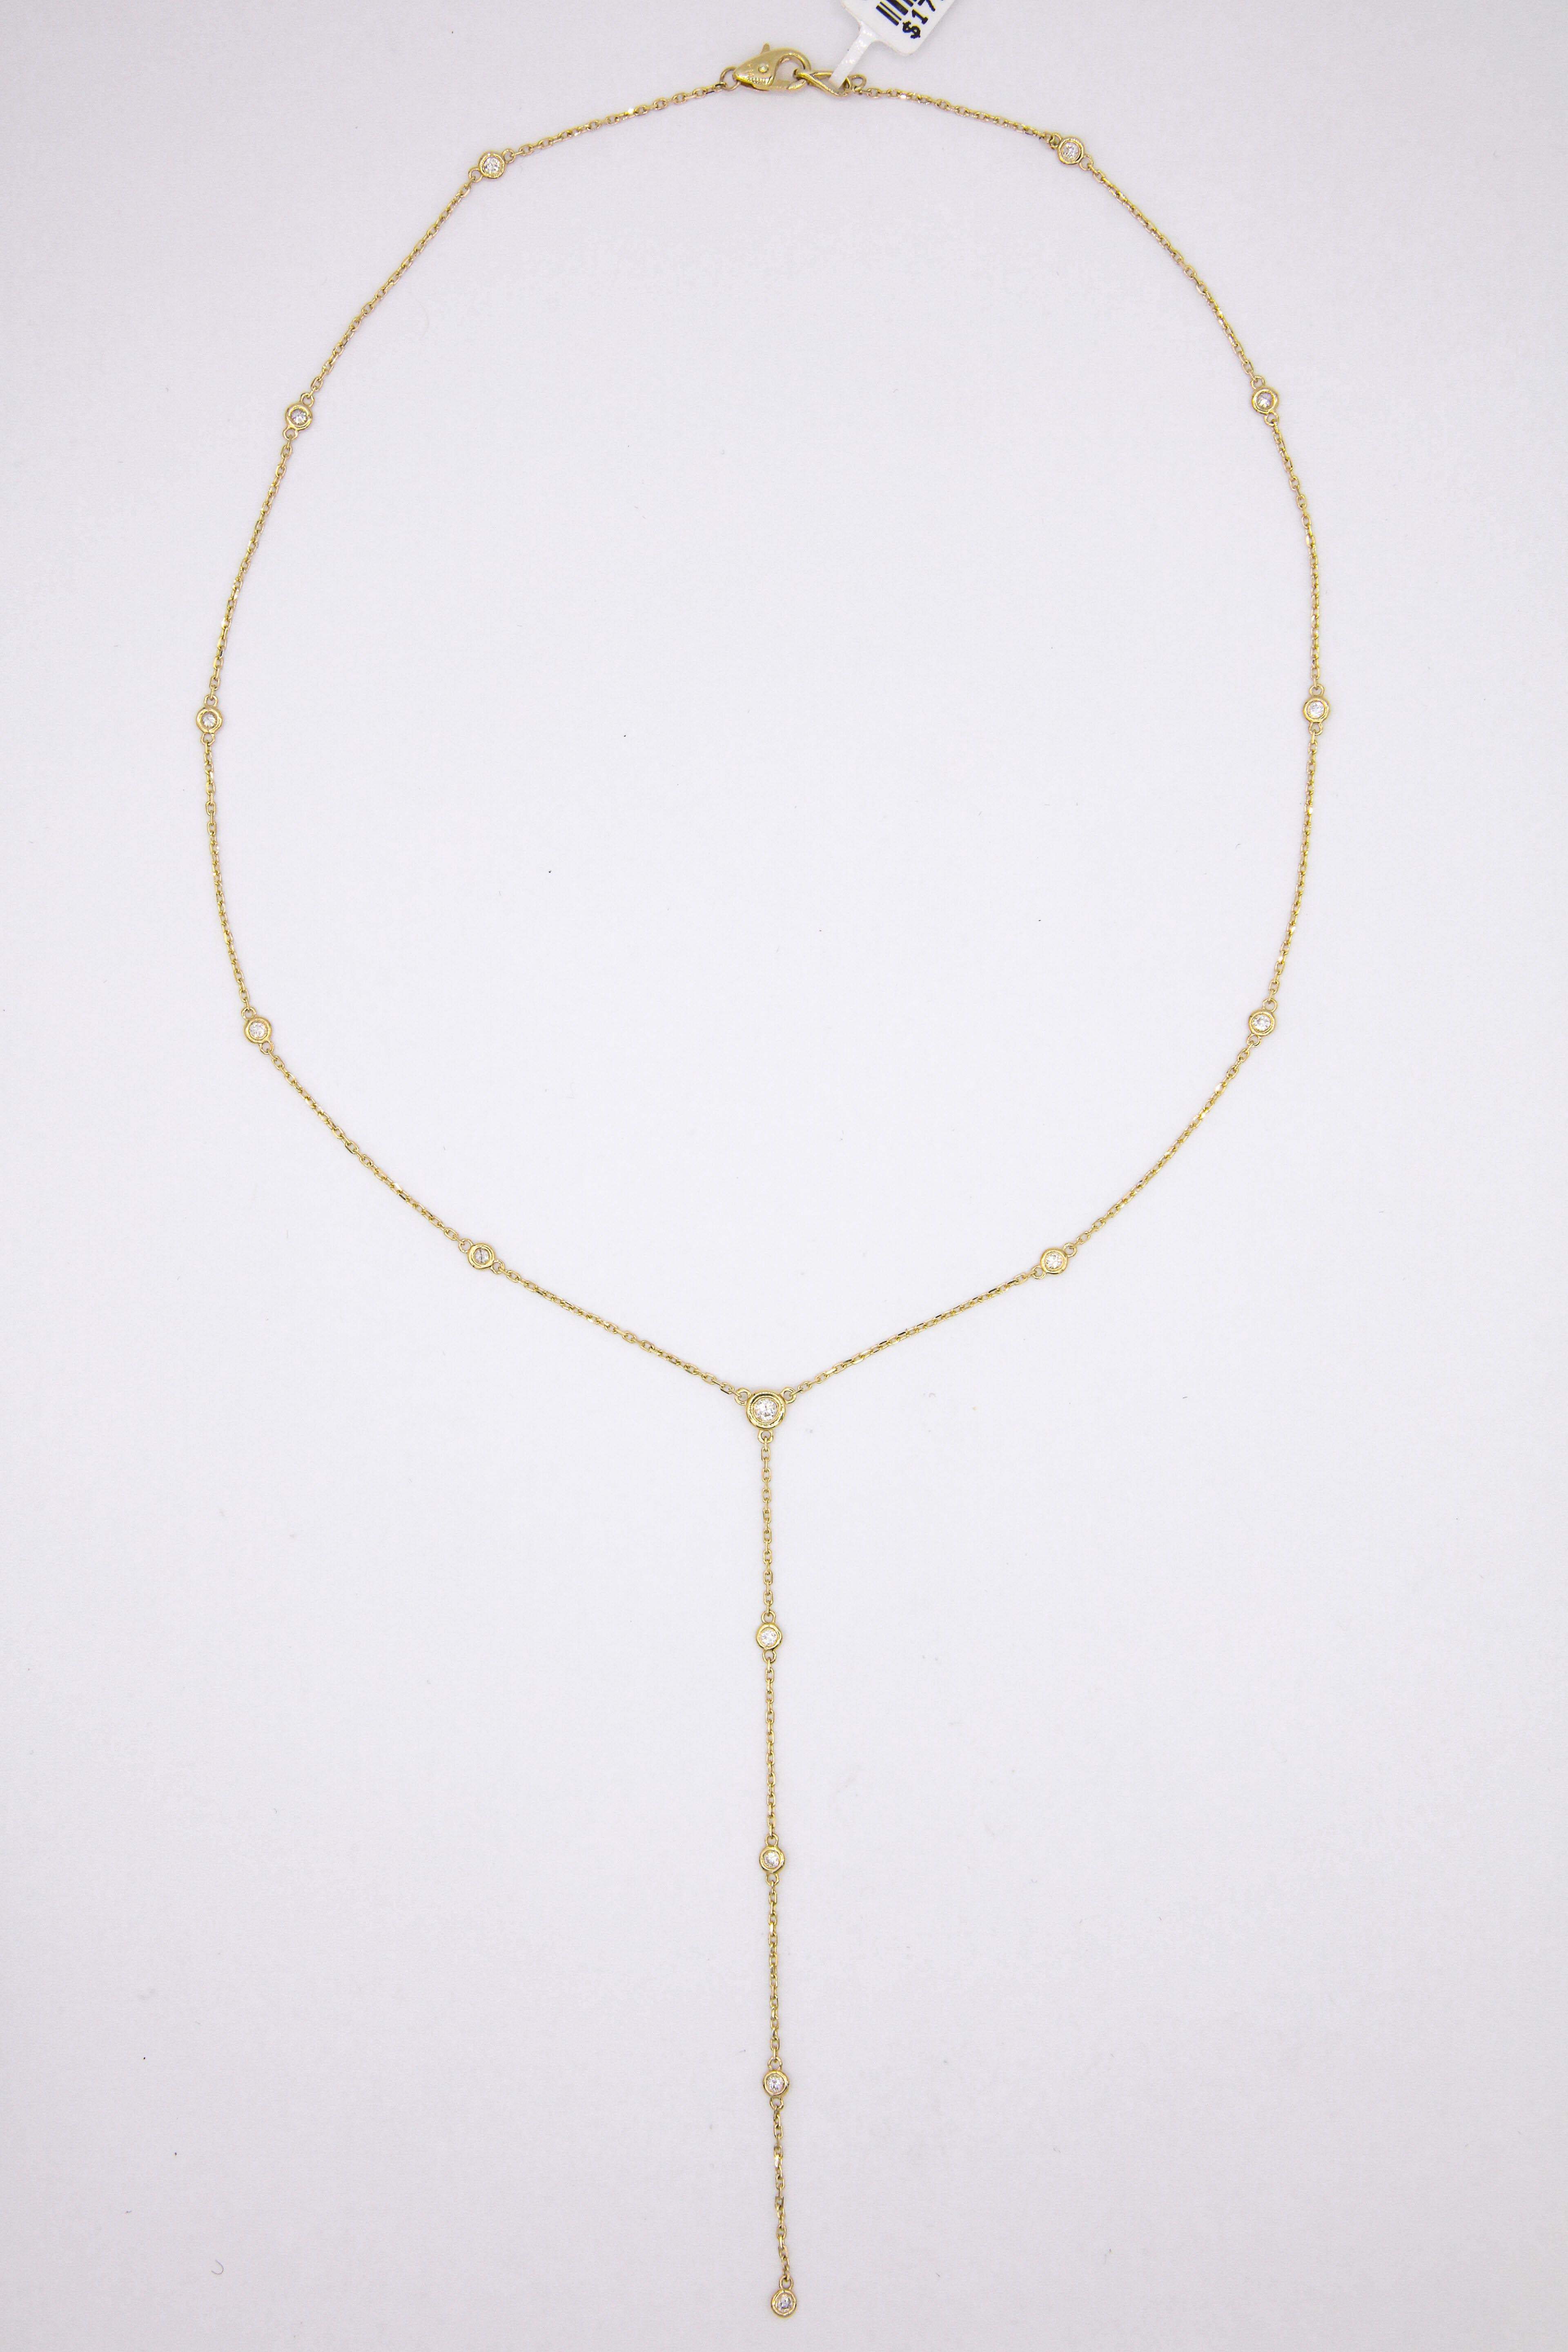 Contemporary Yellow Gold Lariat Diamond Necklace 0.55 Carat